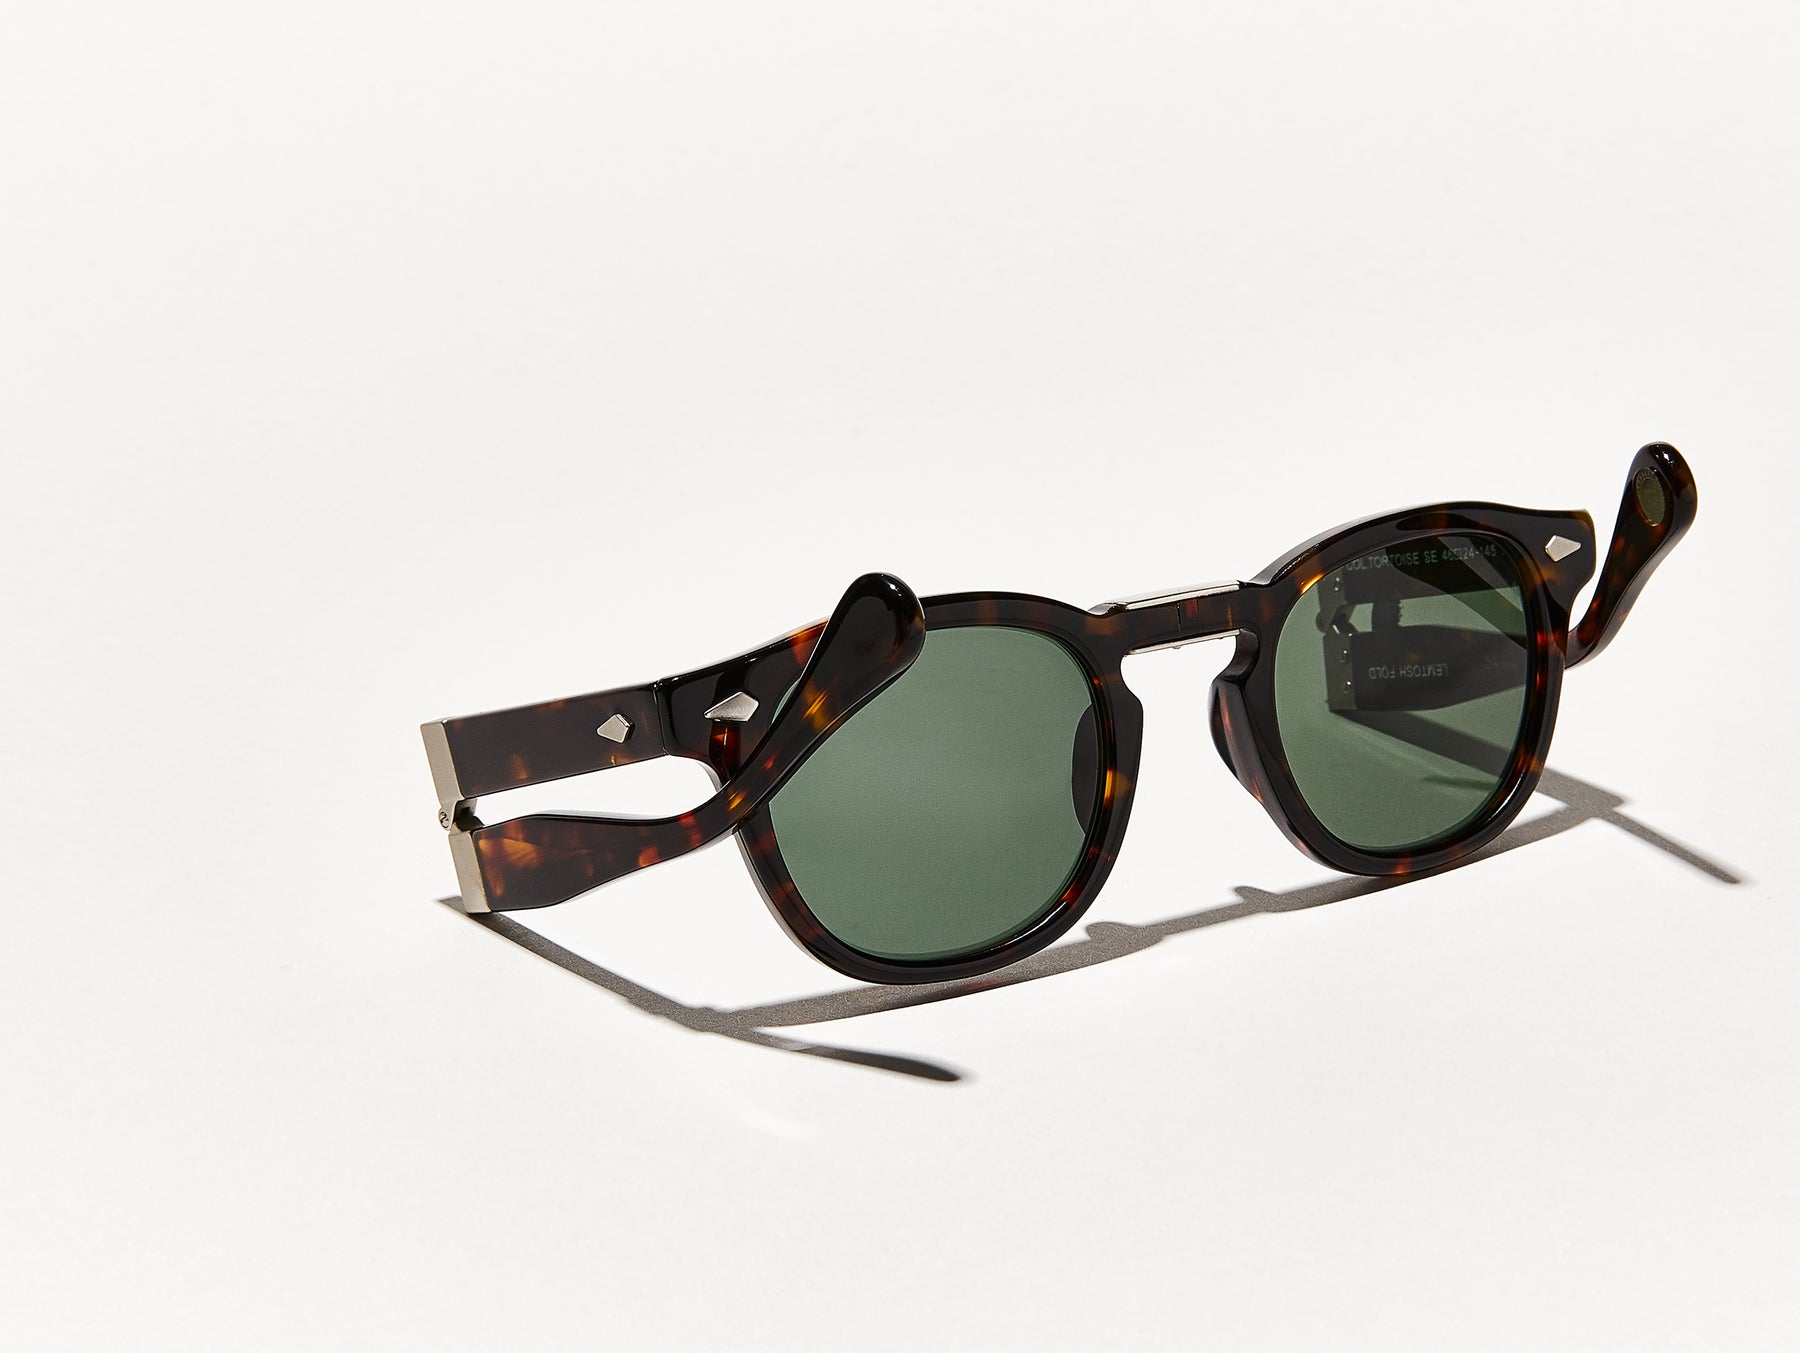 Diamond Edge Cut Lens Aviator Sunglasses with Pattern Temples